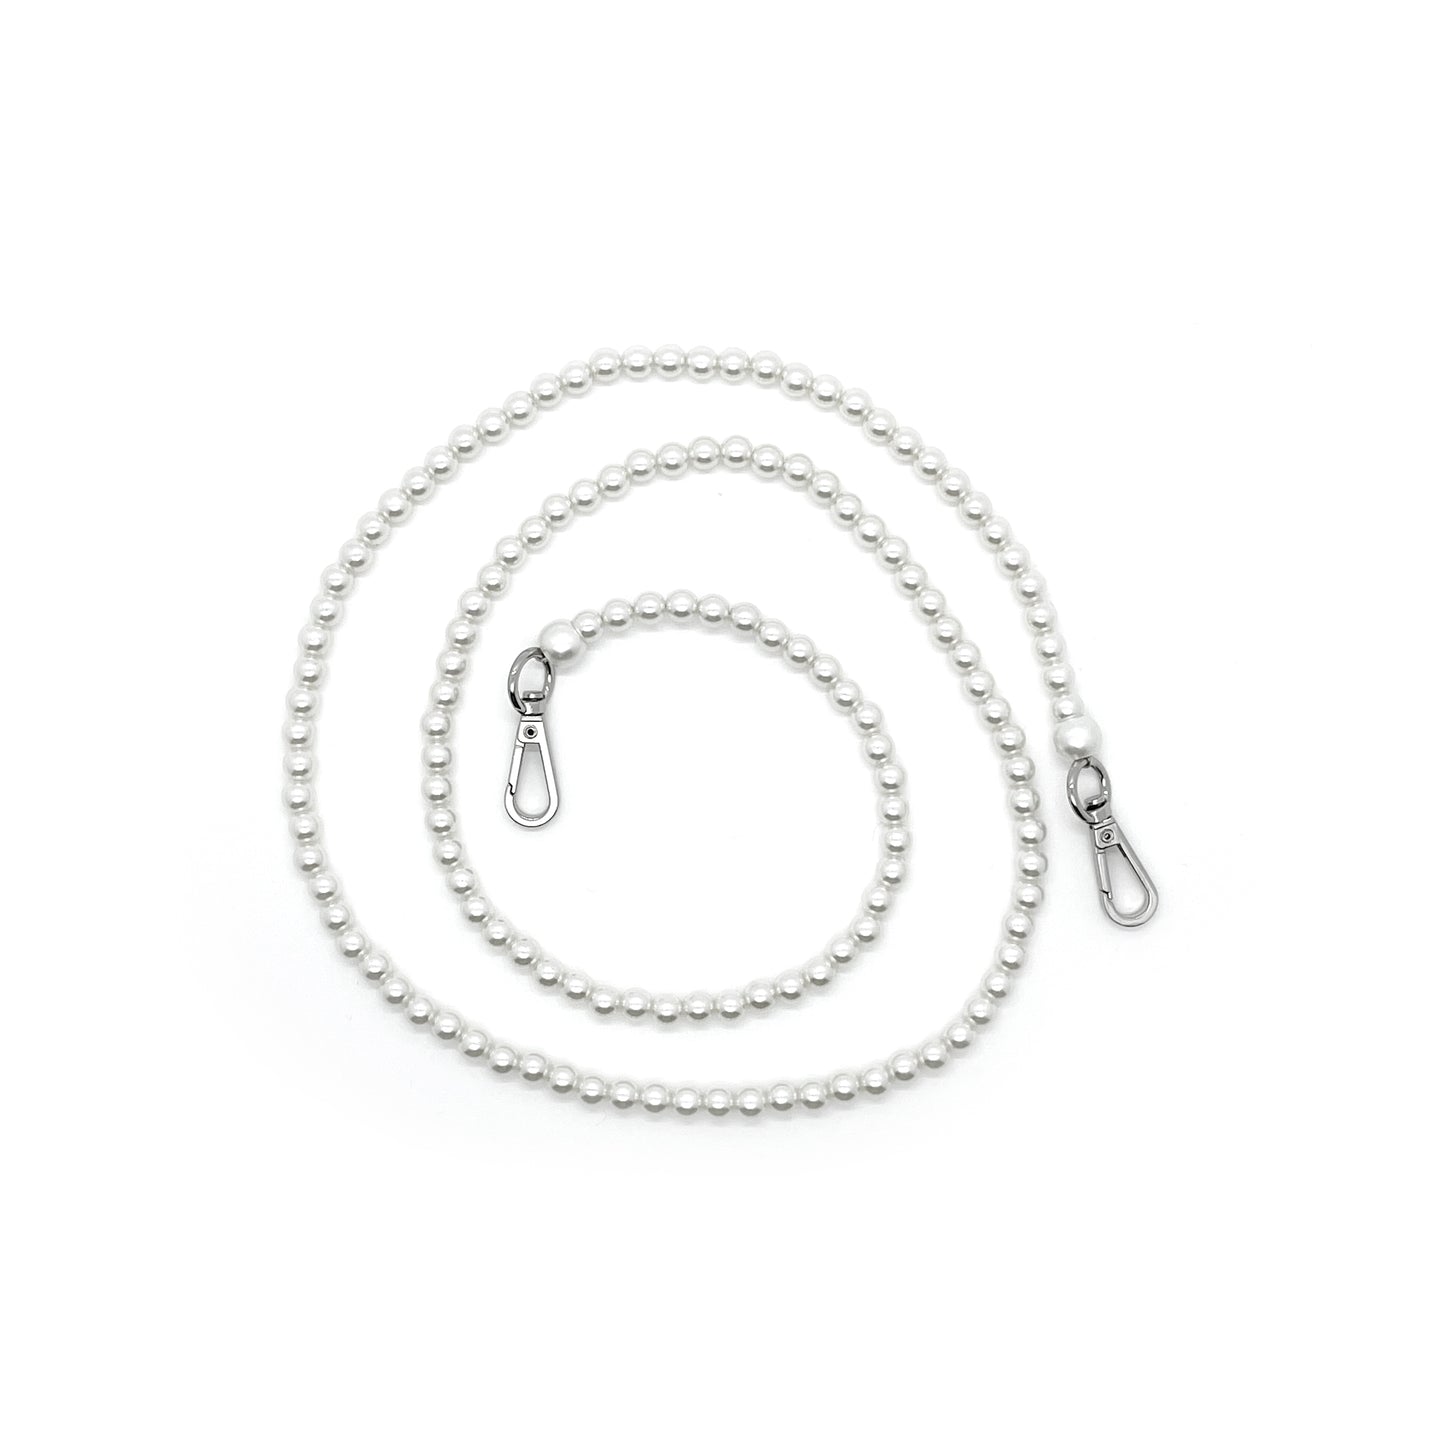 Pearl strap - 110cm (crossbody strap length) - small pearls